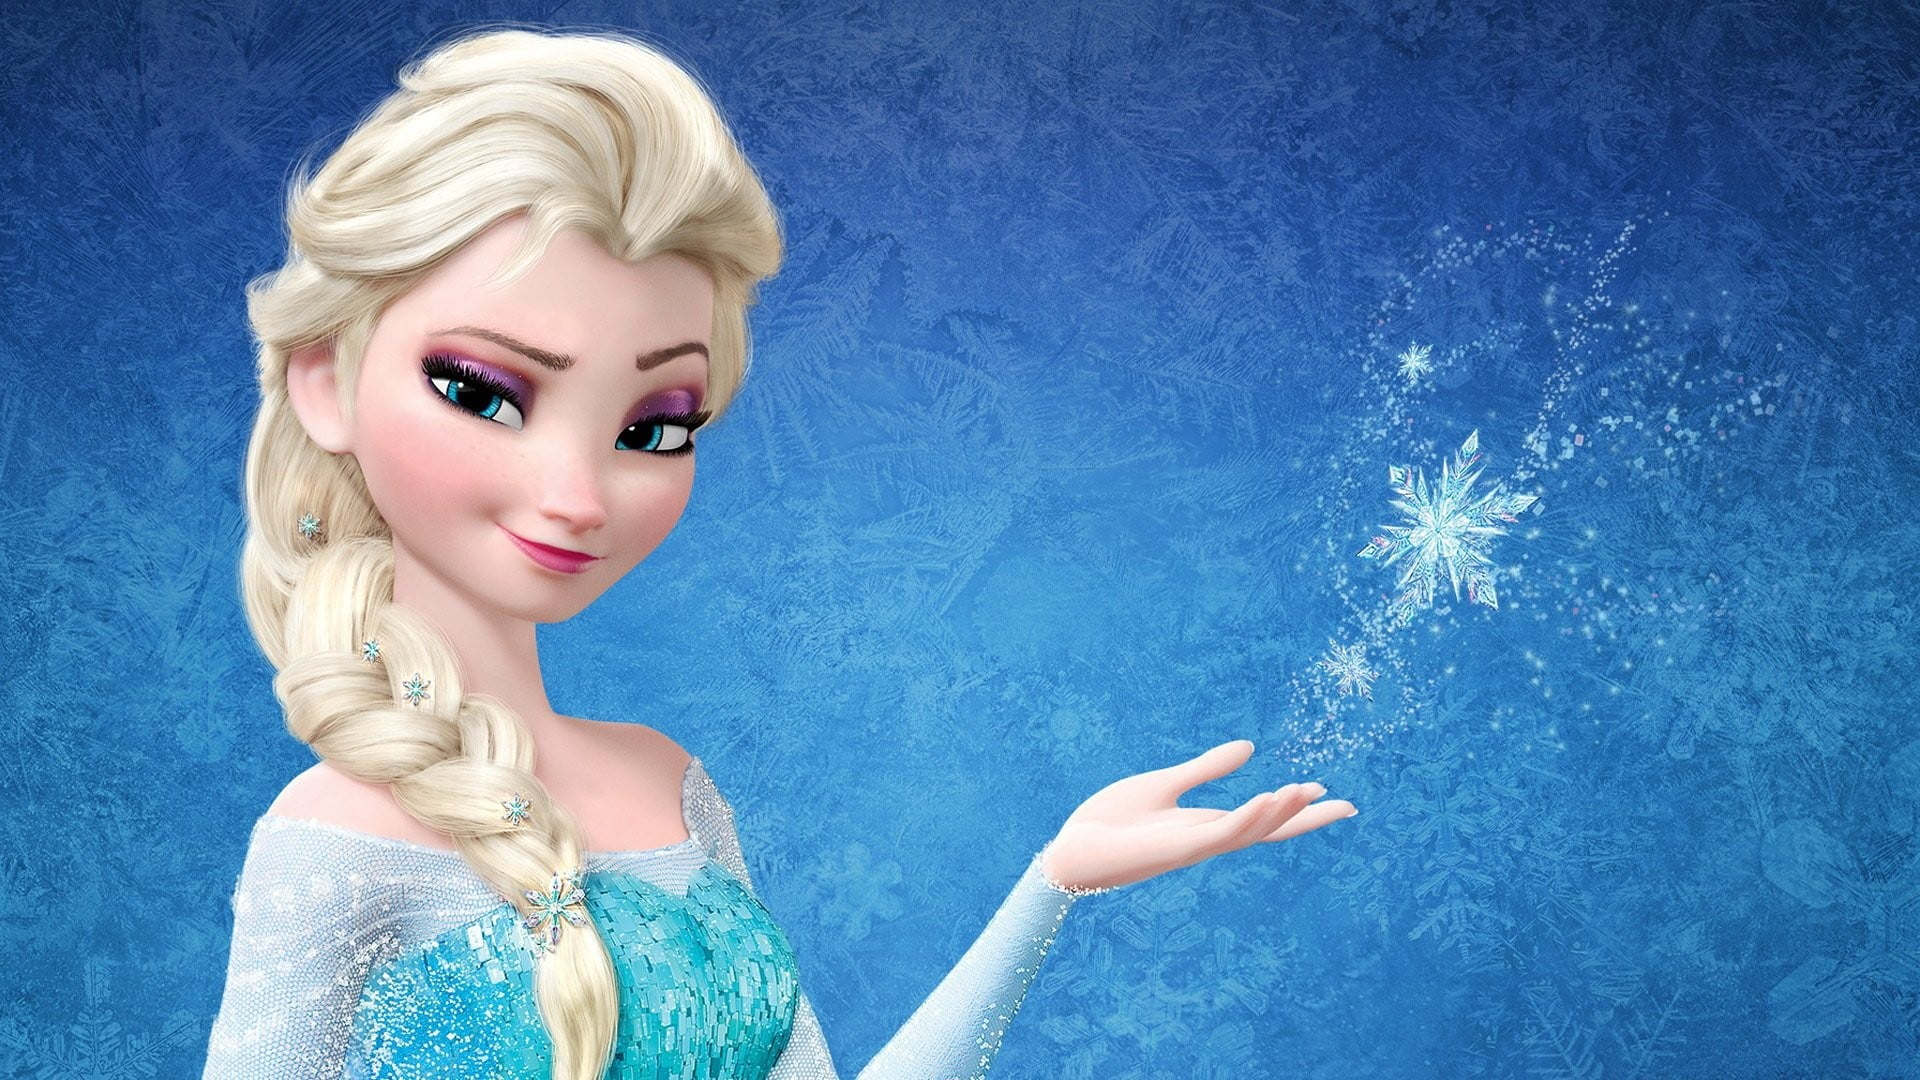 Elsa Of Frozen Movies Frozen (movie) Princess Elsa Animated Movies Wallpaper  - Wallpaperforu